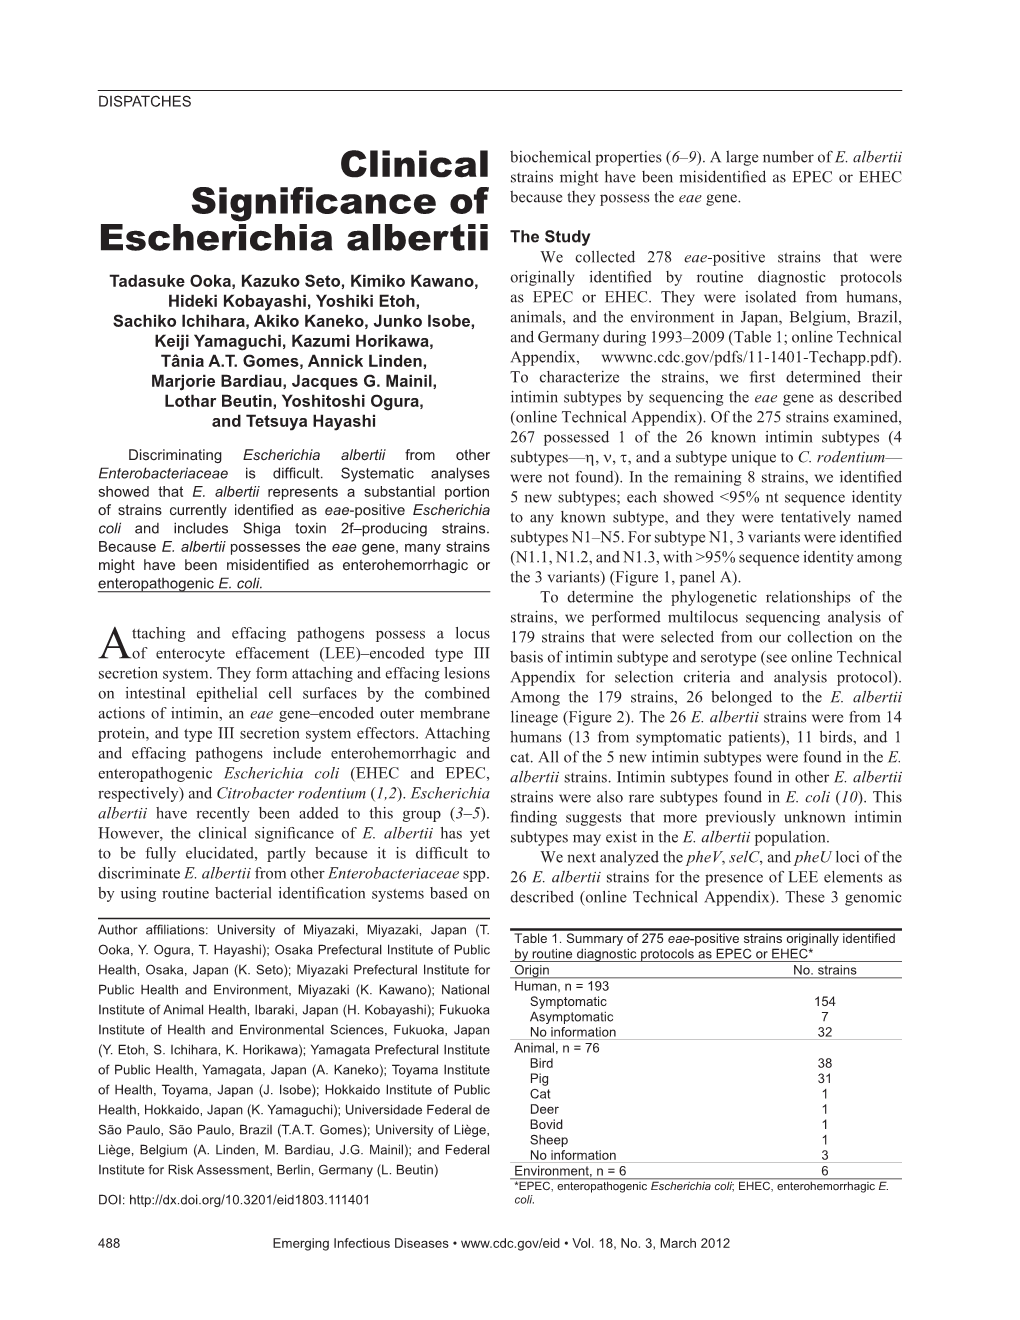 Clinical Significance of Escherichia Albertii